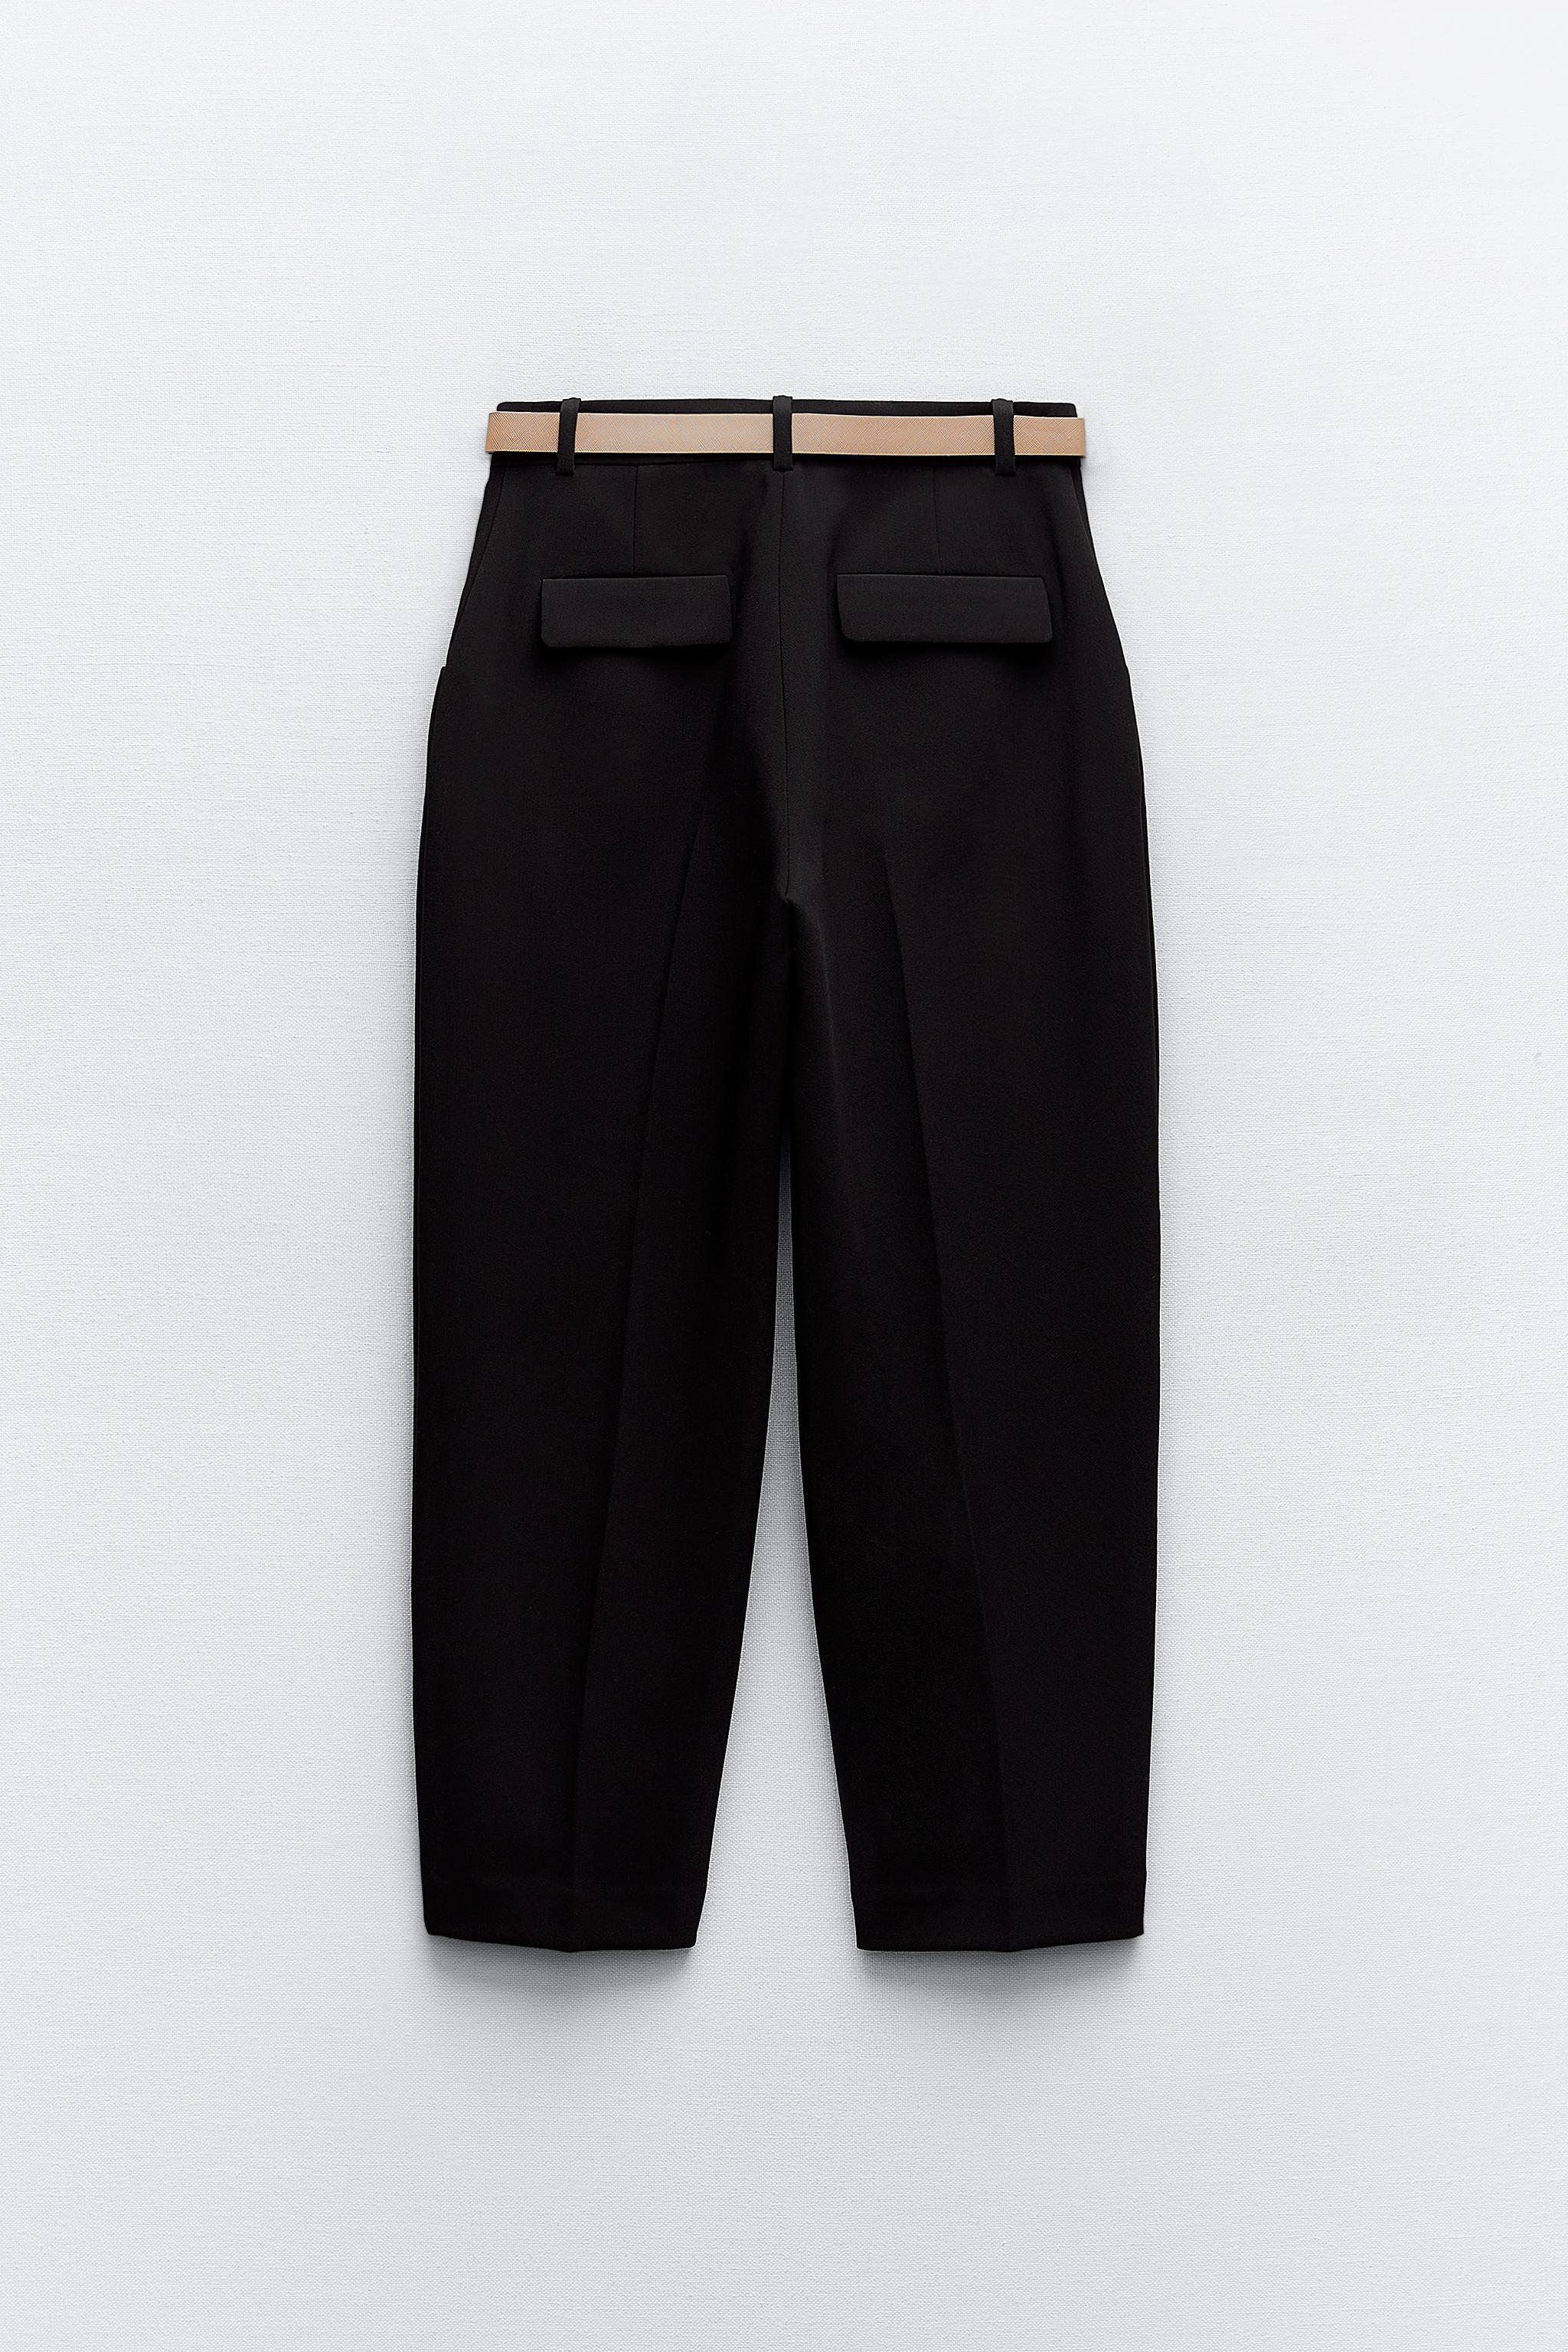 Zara Brown Tie Waist Tapered Pants Women's Size Large New - beyond